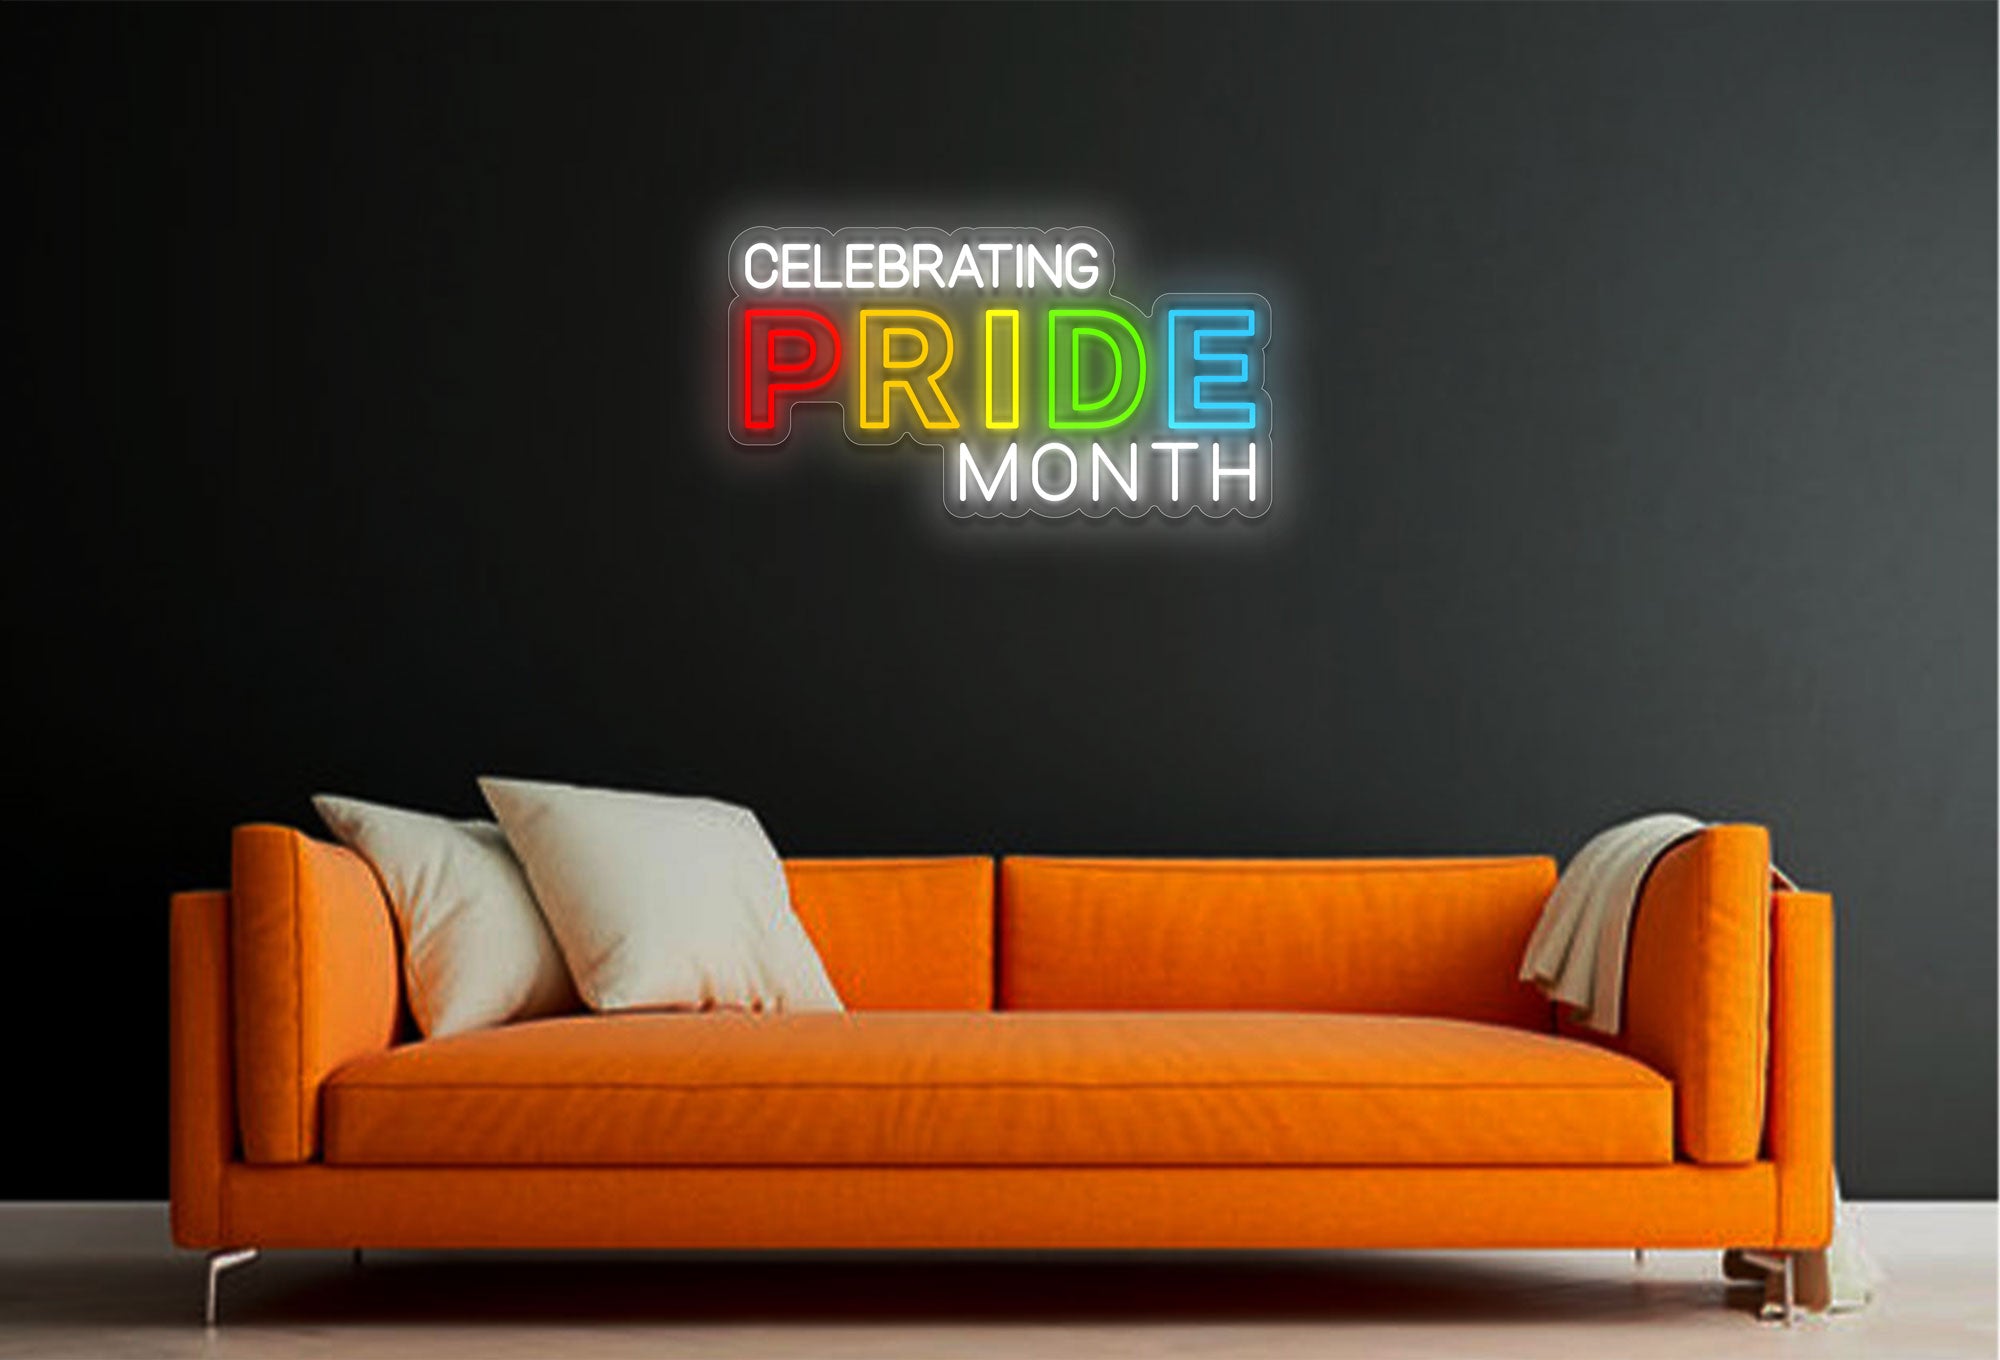 Celebrating Pride Month LED Neon Sign